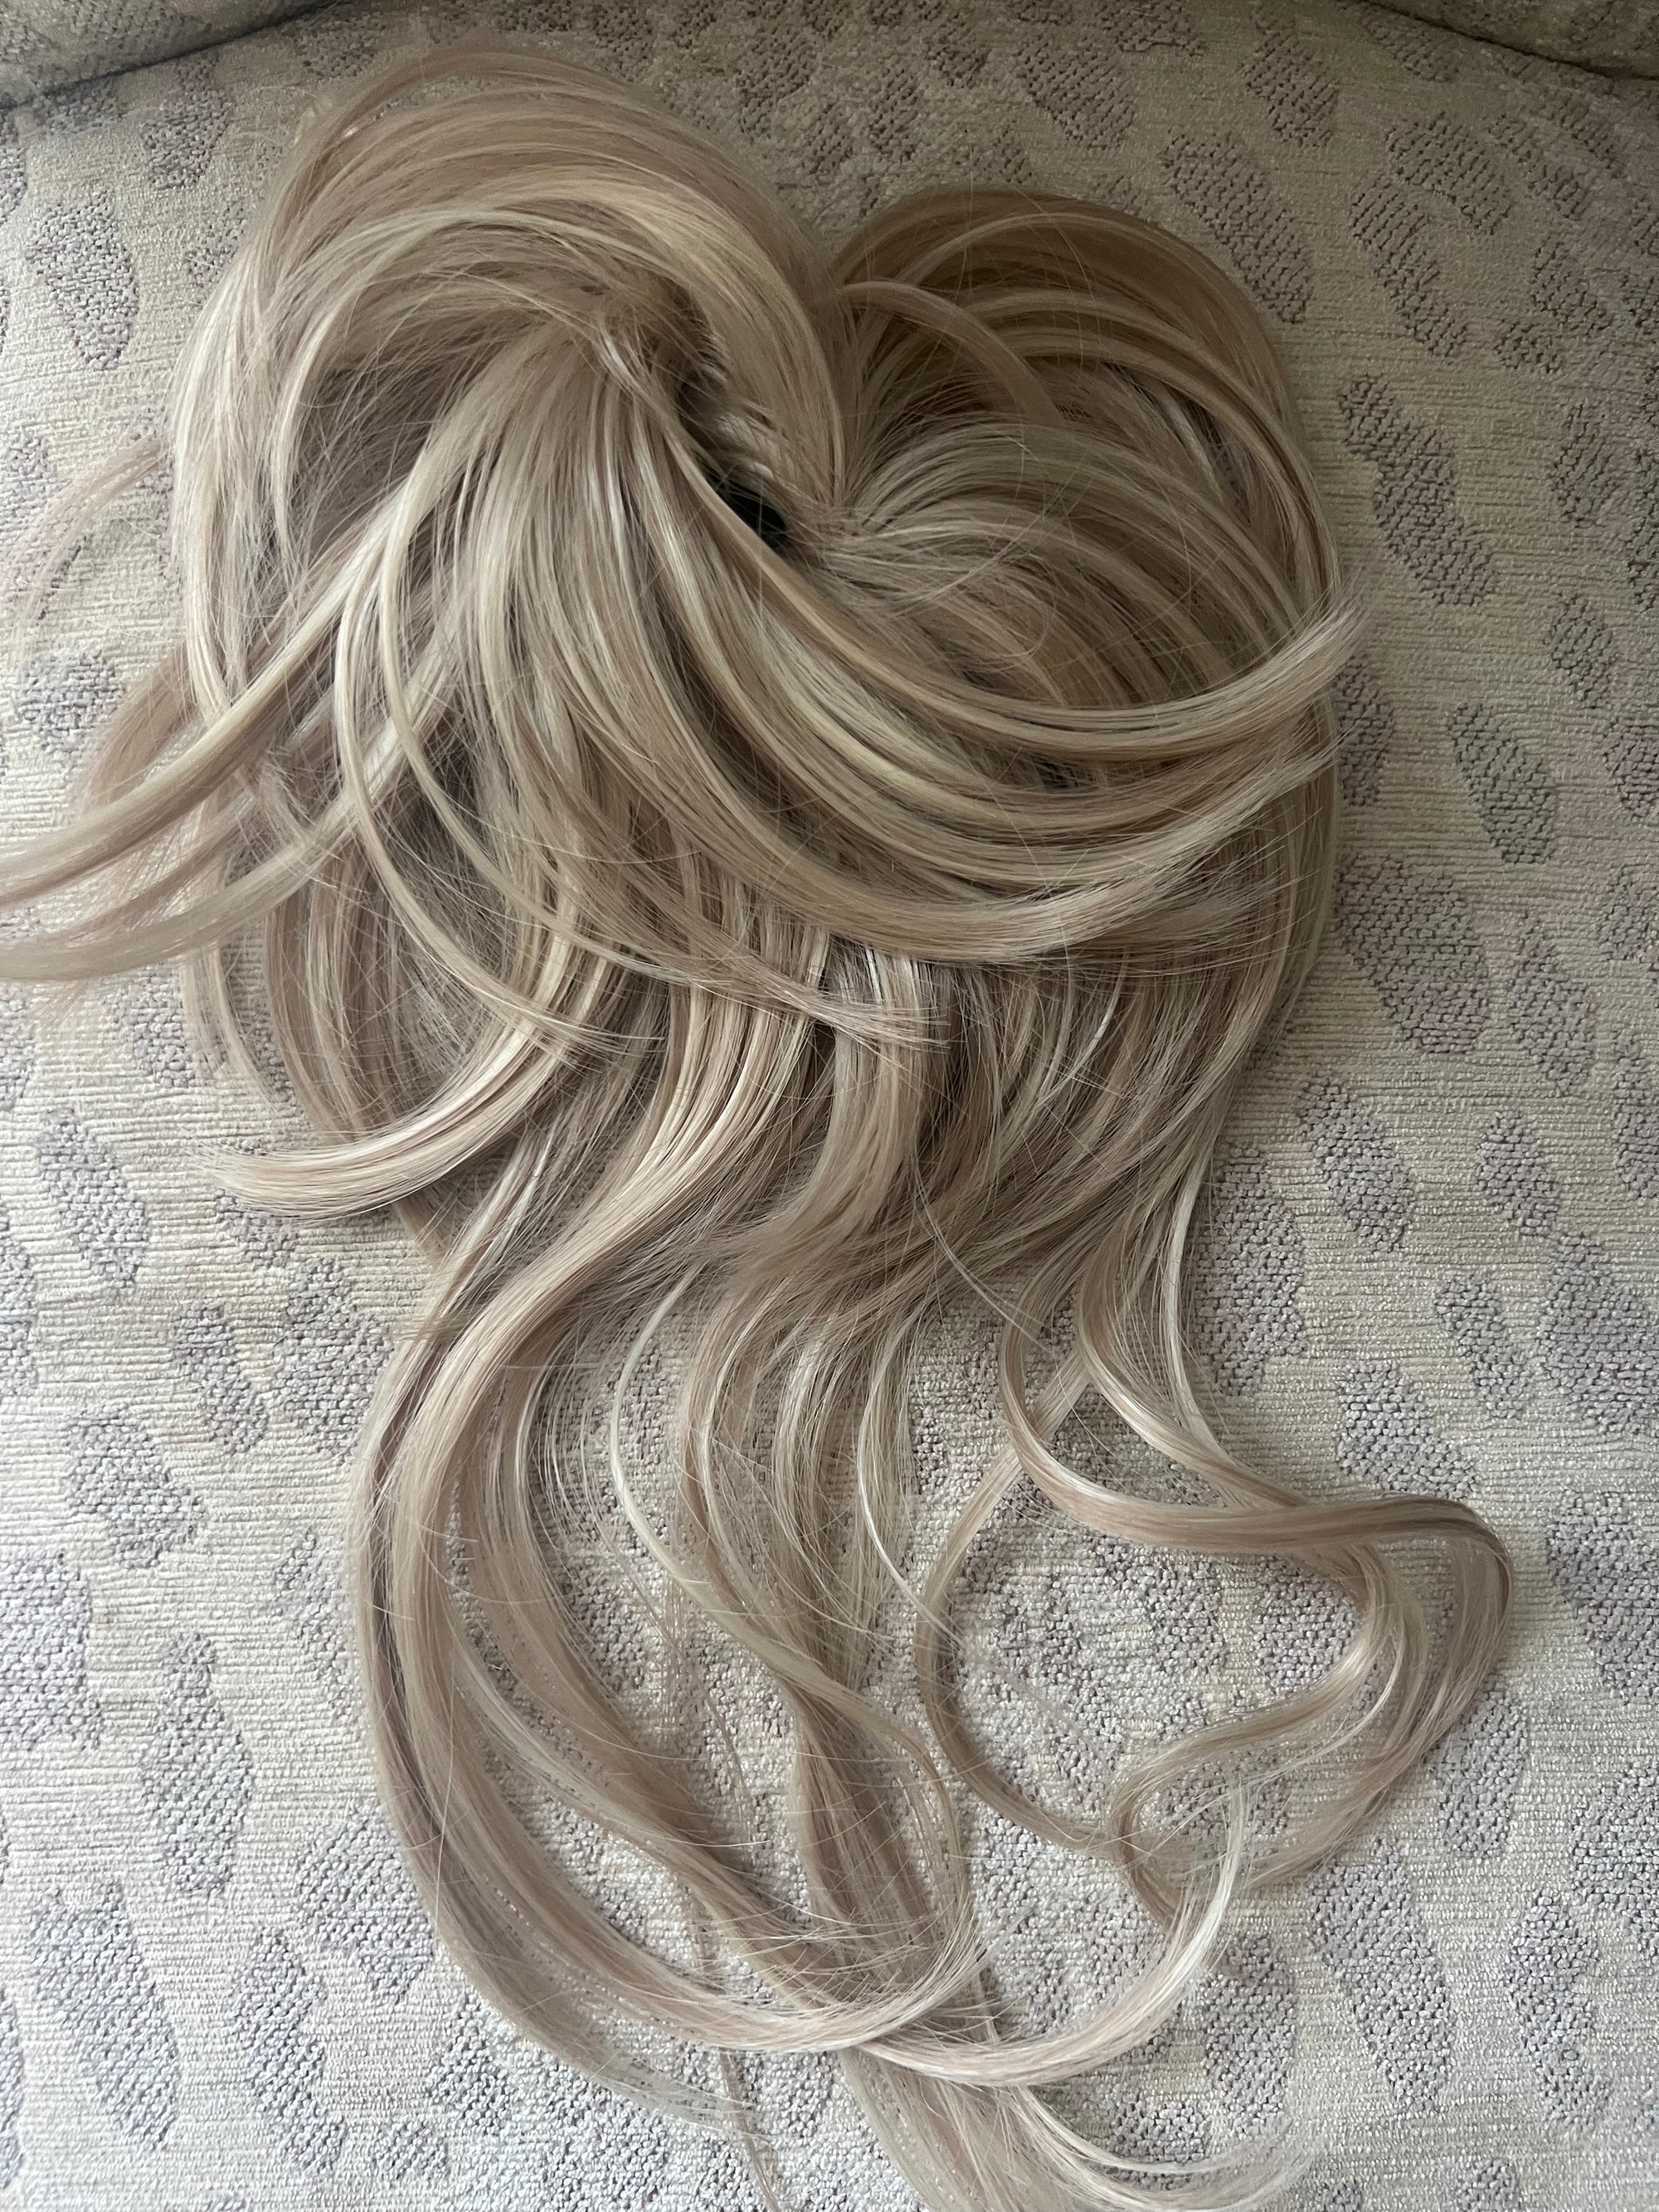 Tillstyle elastic hair-bun scrunchie with bangs hair pieces for women light blonde